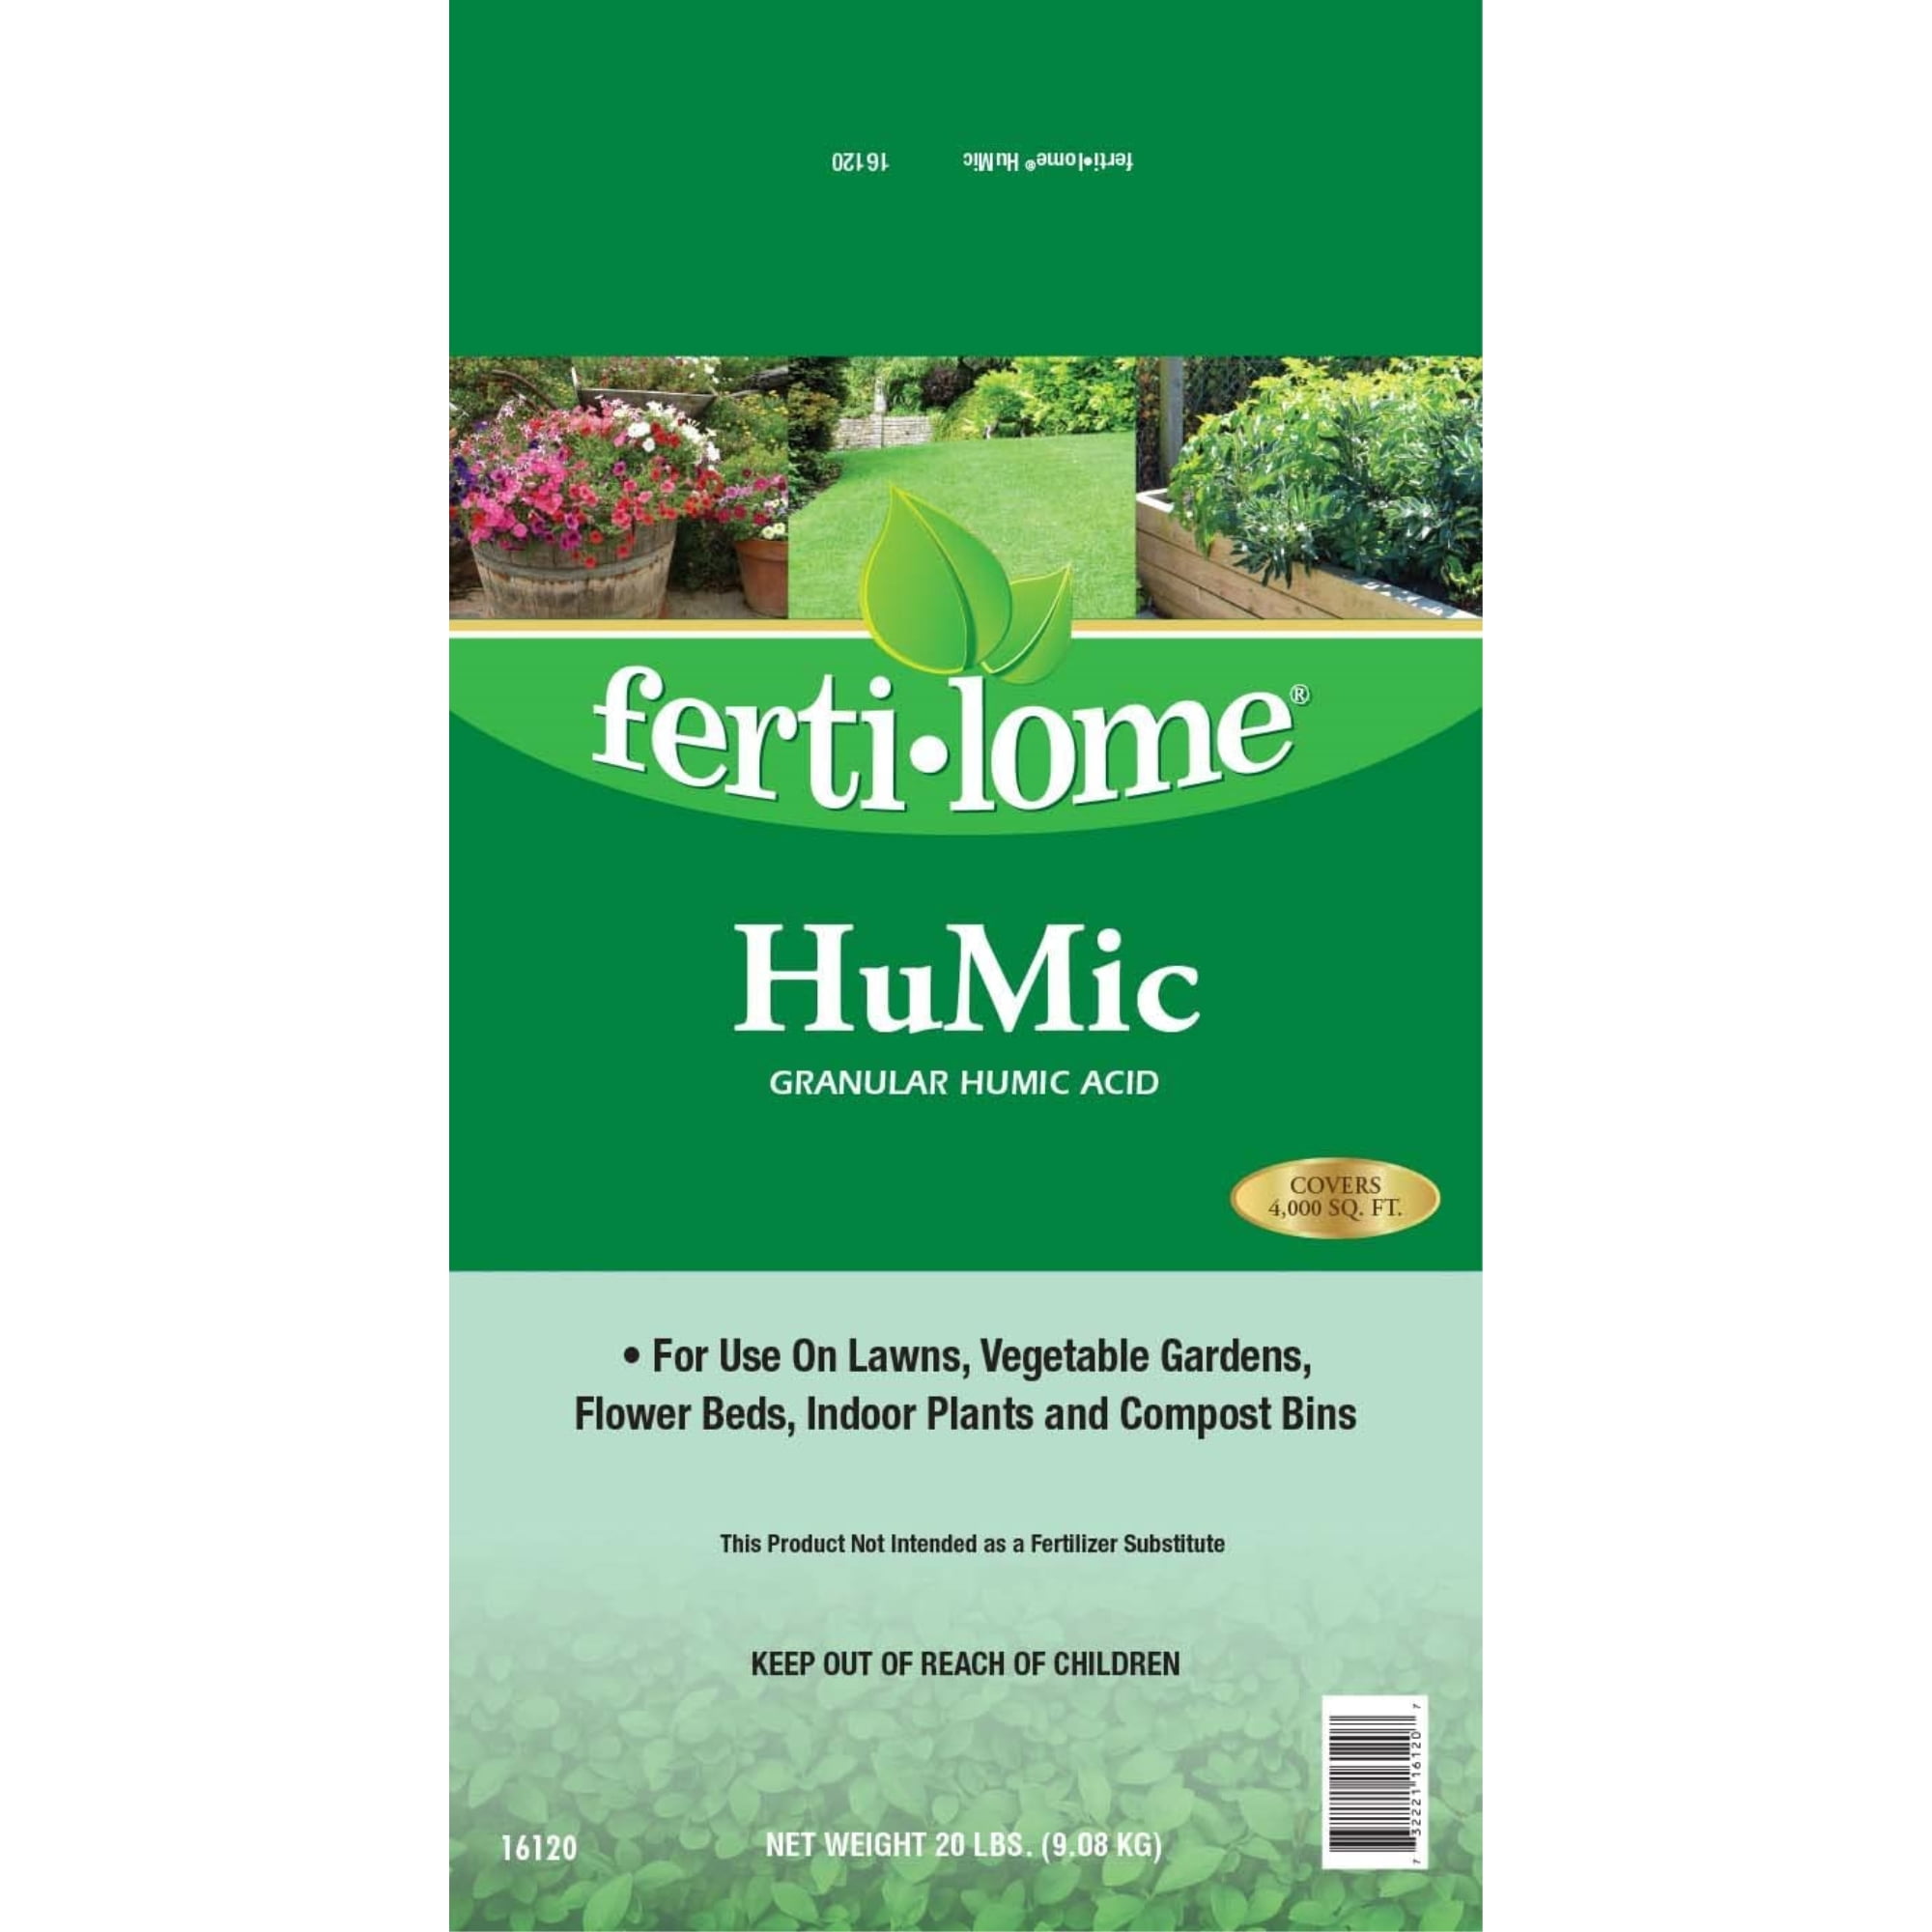 Voluntary Purchasing Group Granular Humic Acid Soil Amendment, 20 lb Bag - image 1 of 2